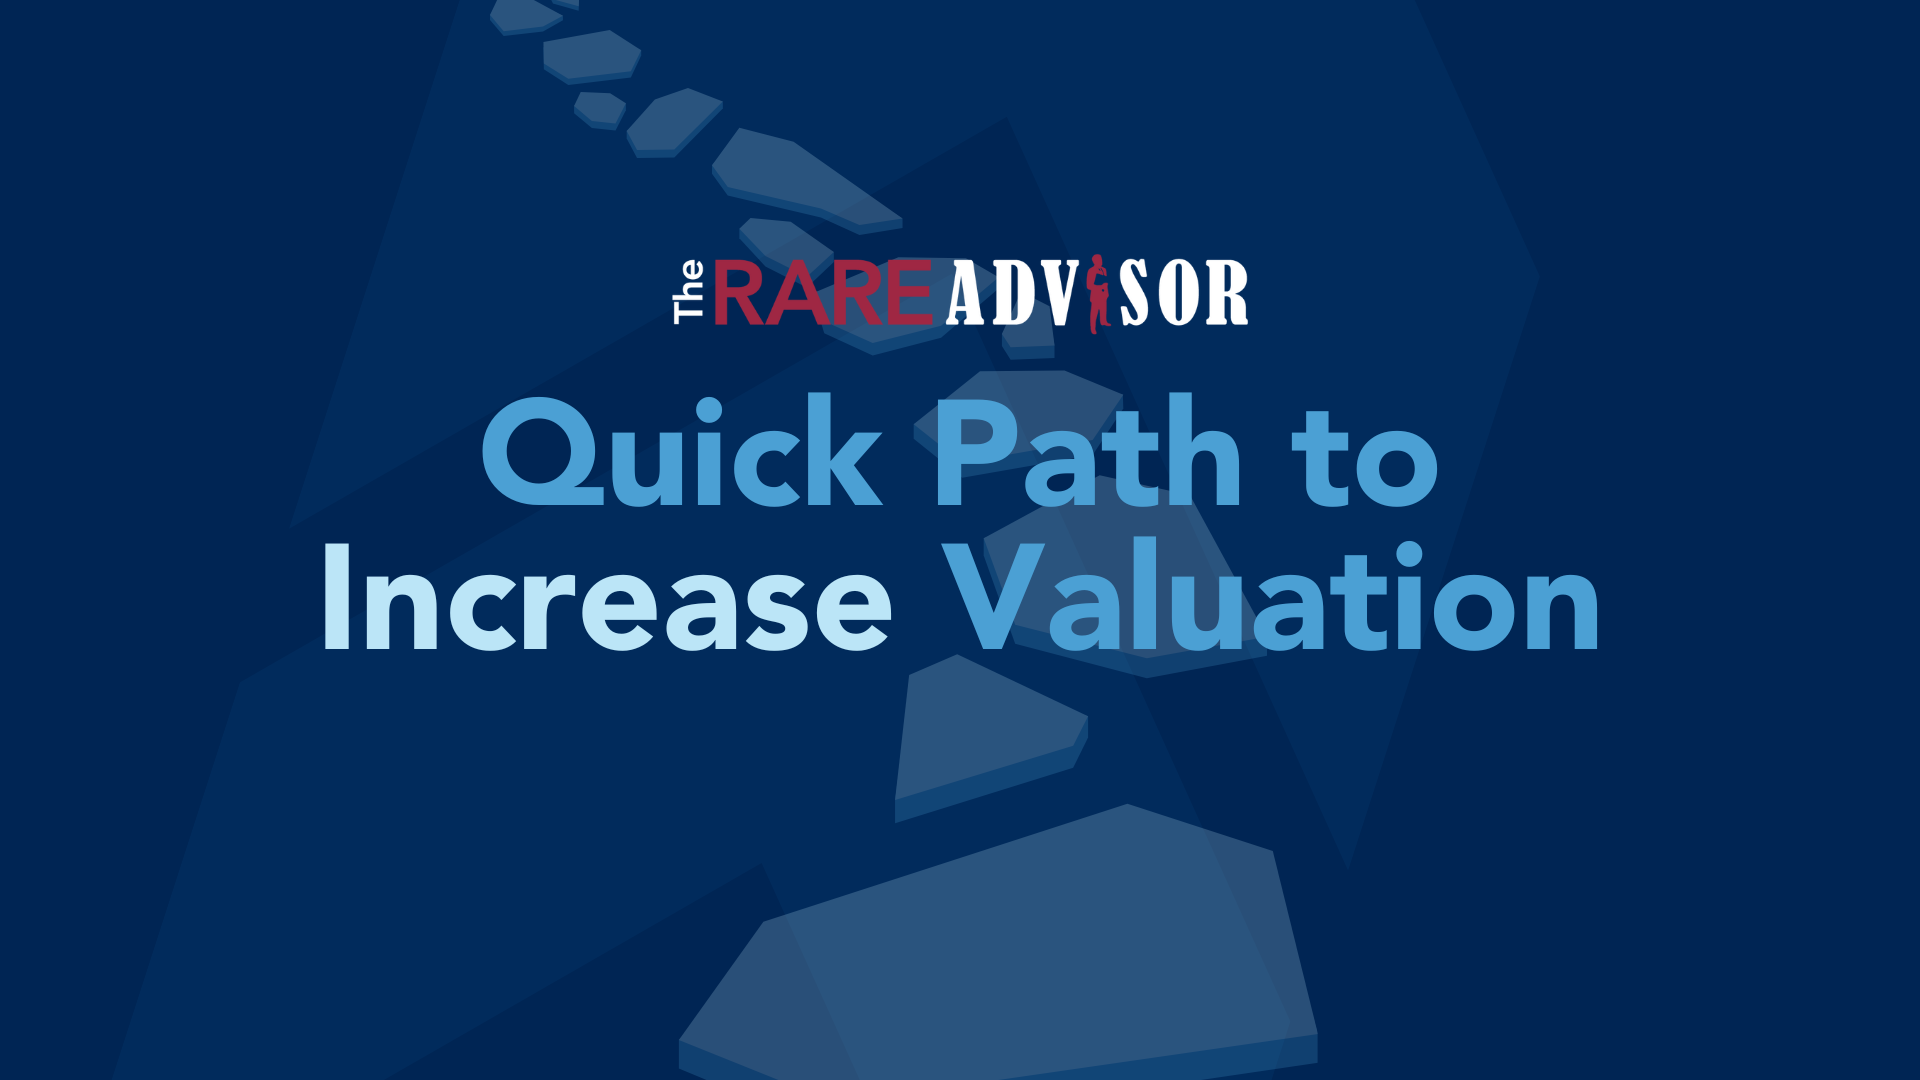 The RARE Advisor: Quick Path to Increase Valuation